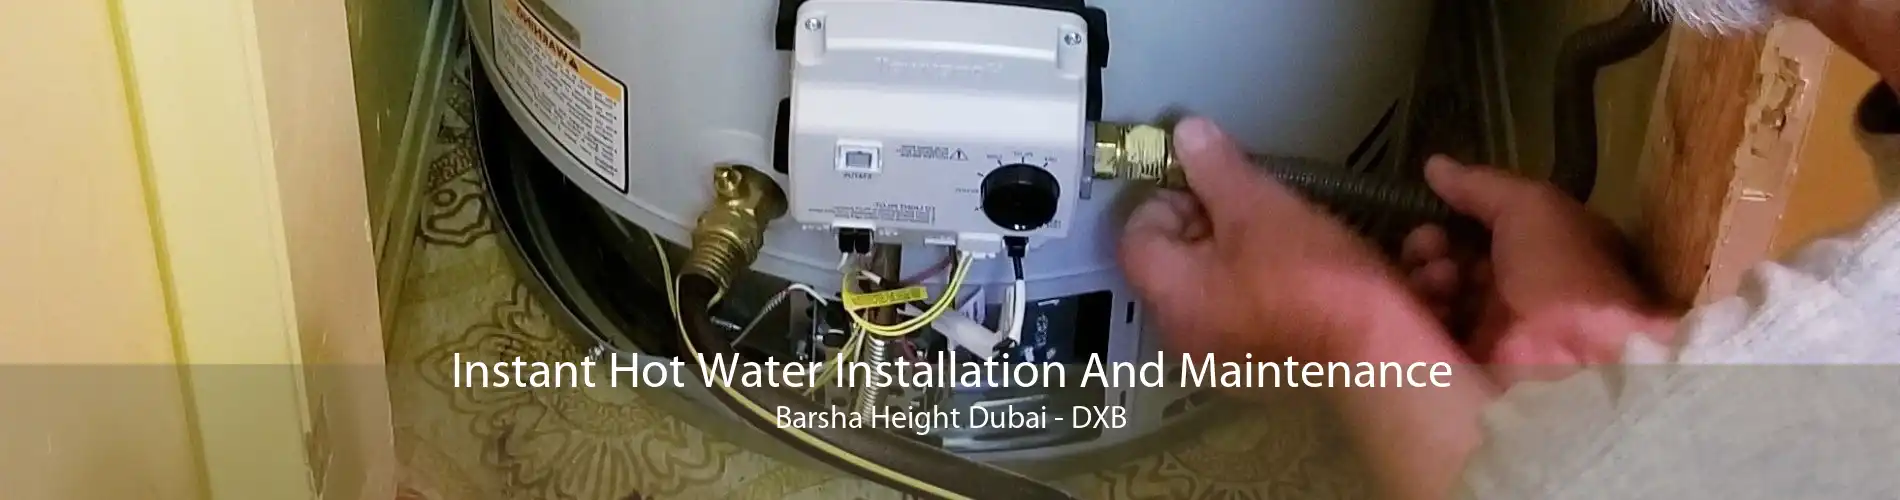 Instant Hot Water Installation And Maintenance Barsha Height Dubai - DXB